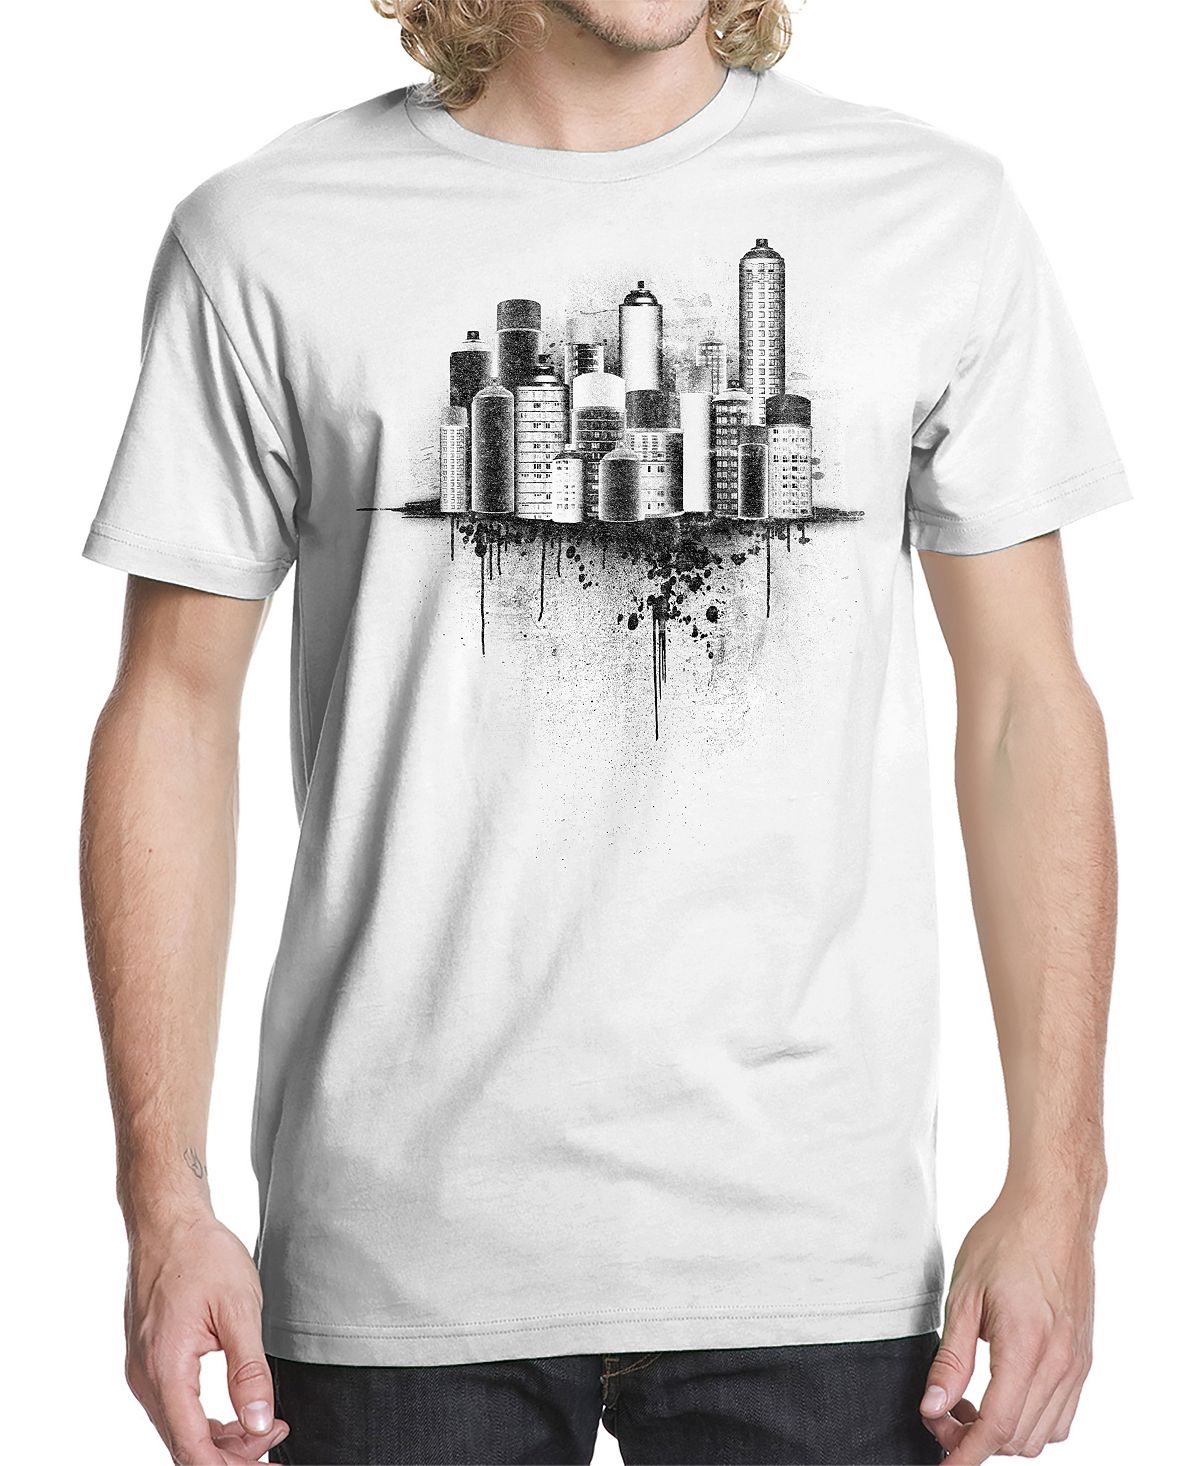 Мужская футболка с графикой skyline spray Beachwood, белый